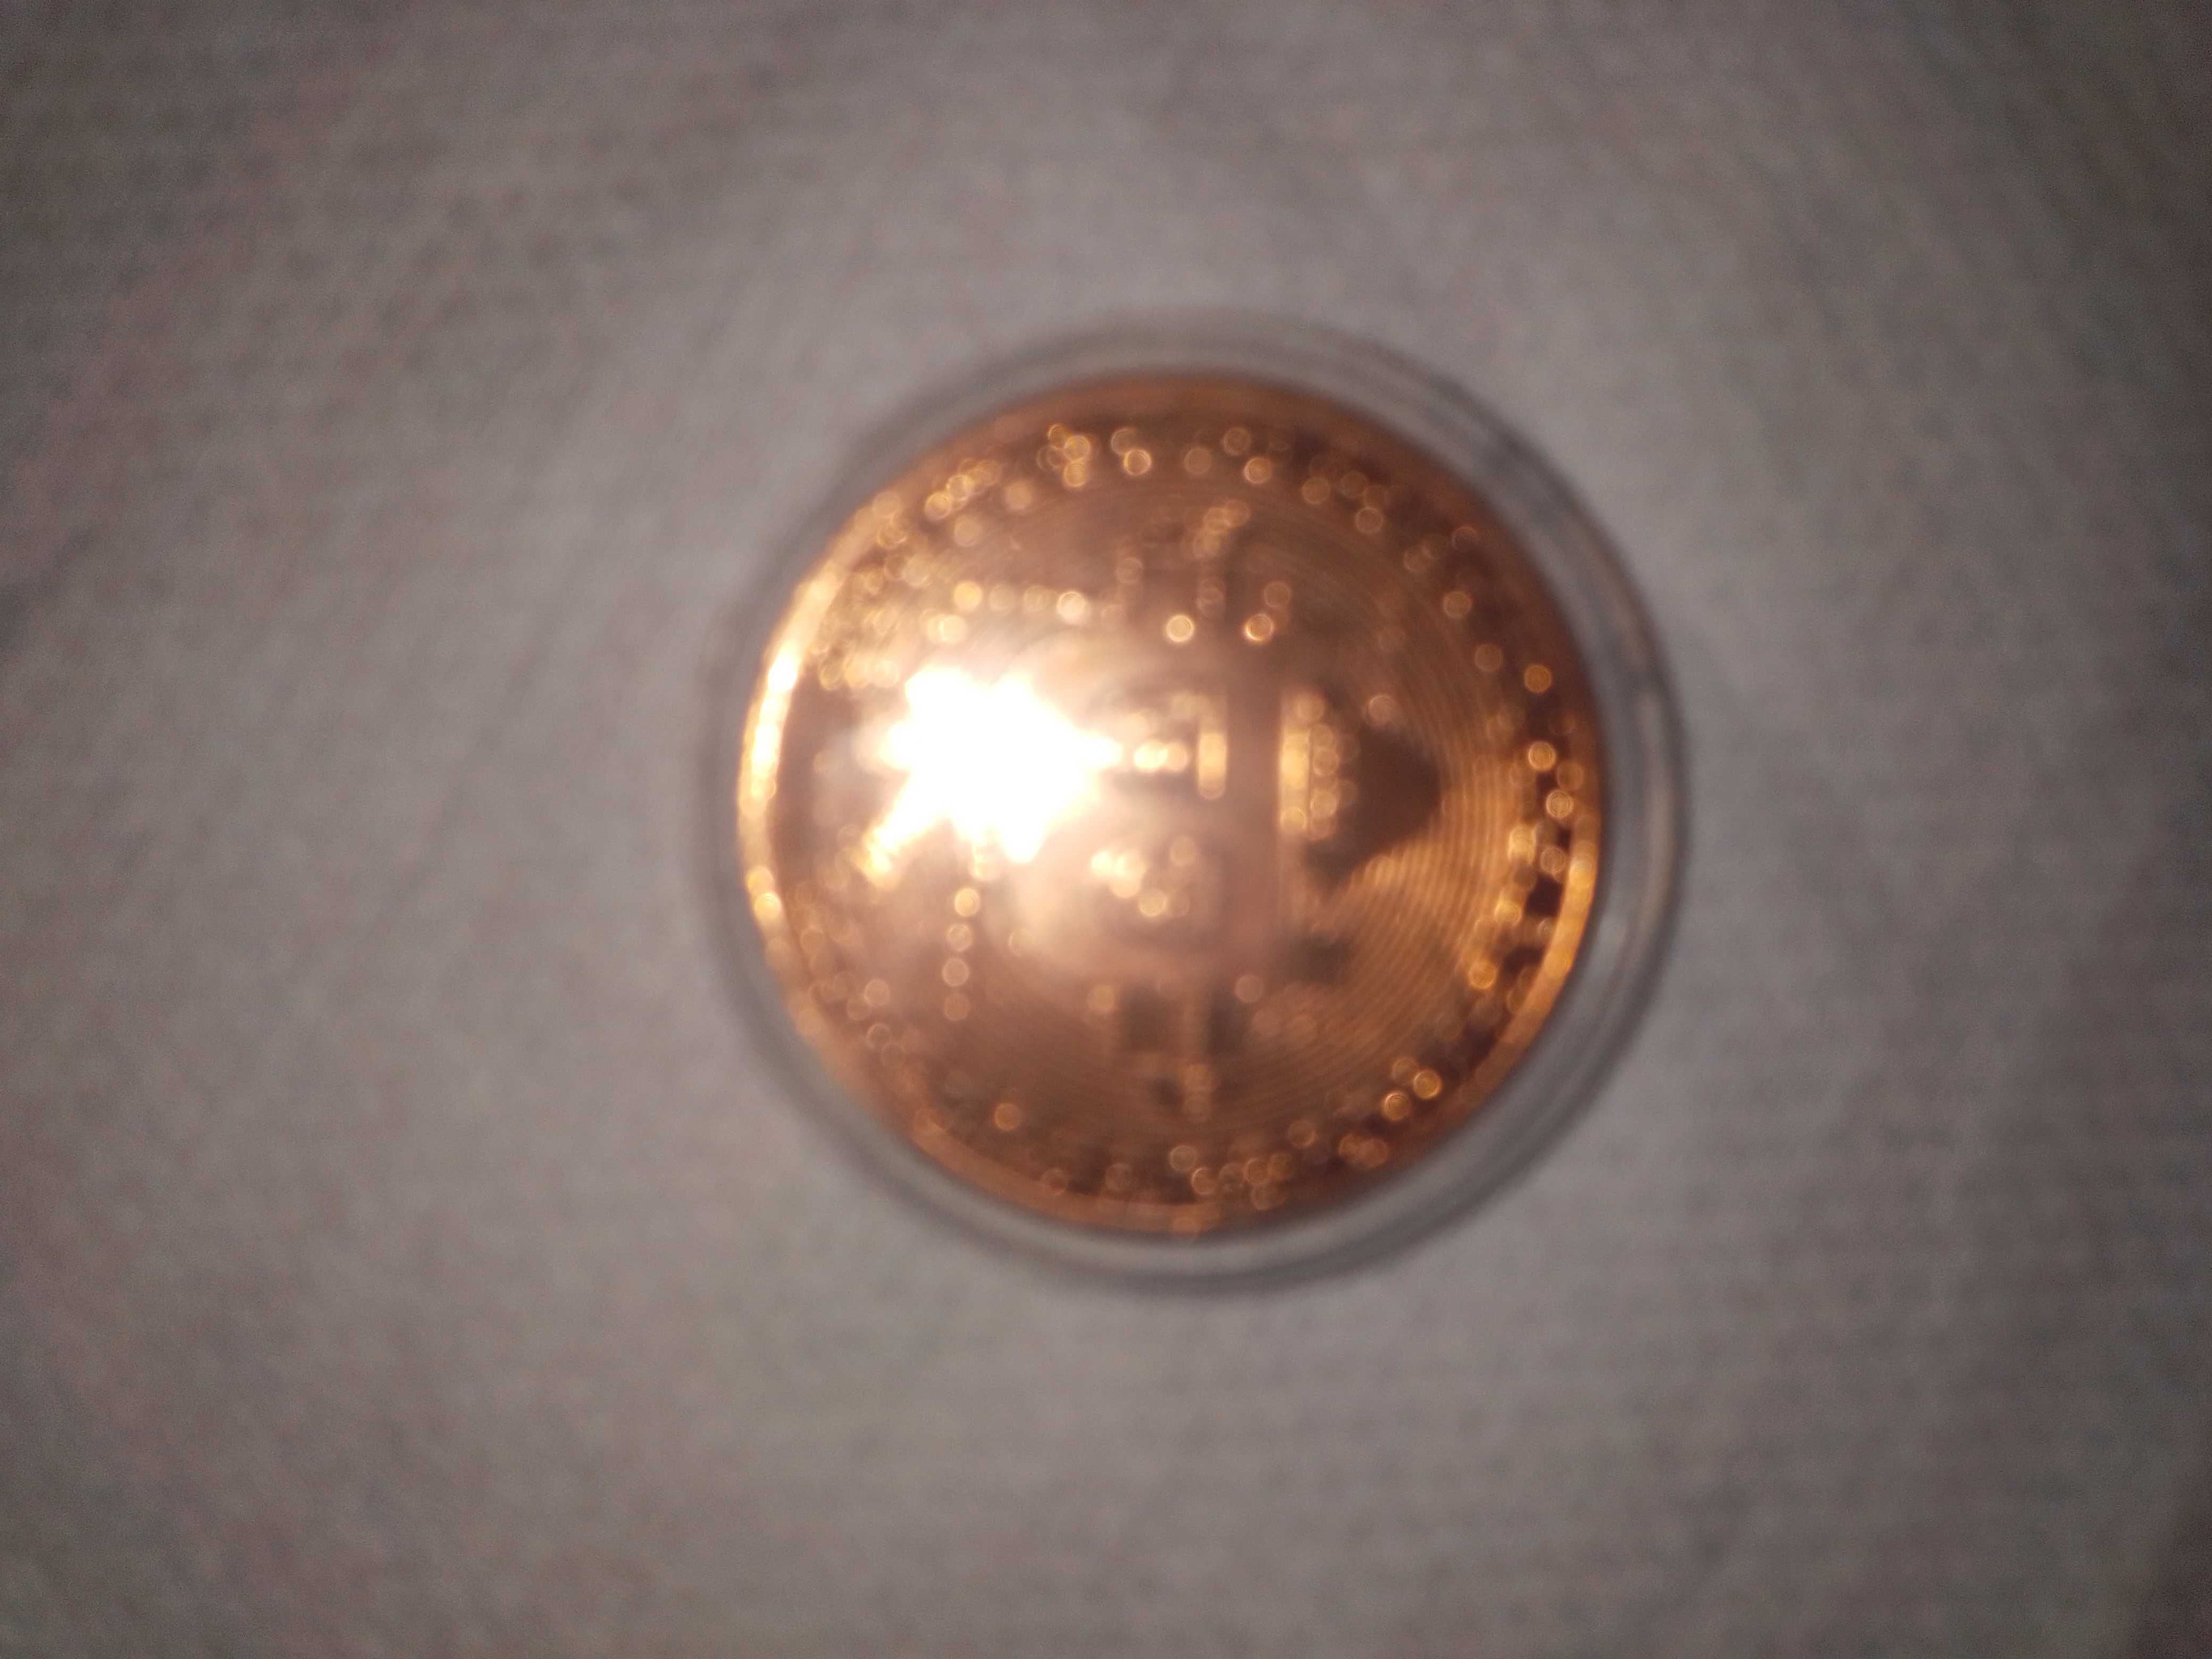 Bitcoin miedź moneta kolekcjonerska w kapsule